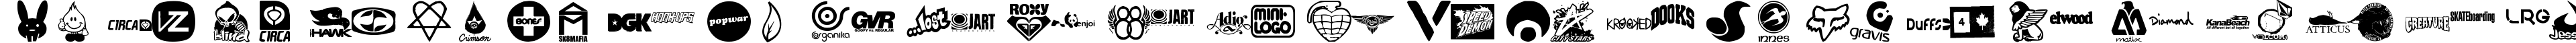 Пример написания английского алфавита шрифтом logoskate 2.0